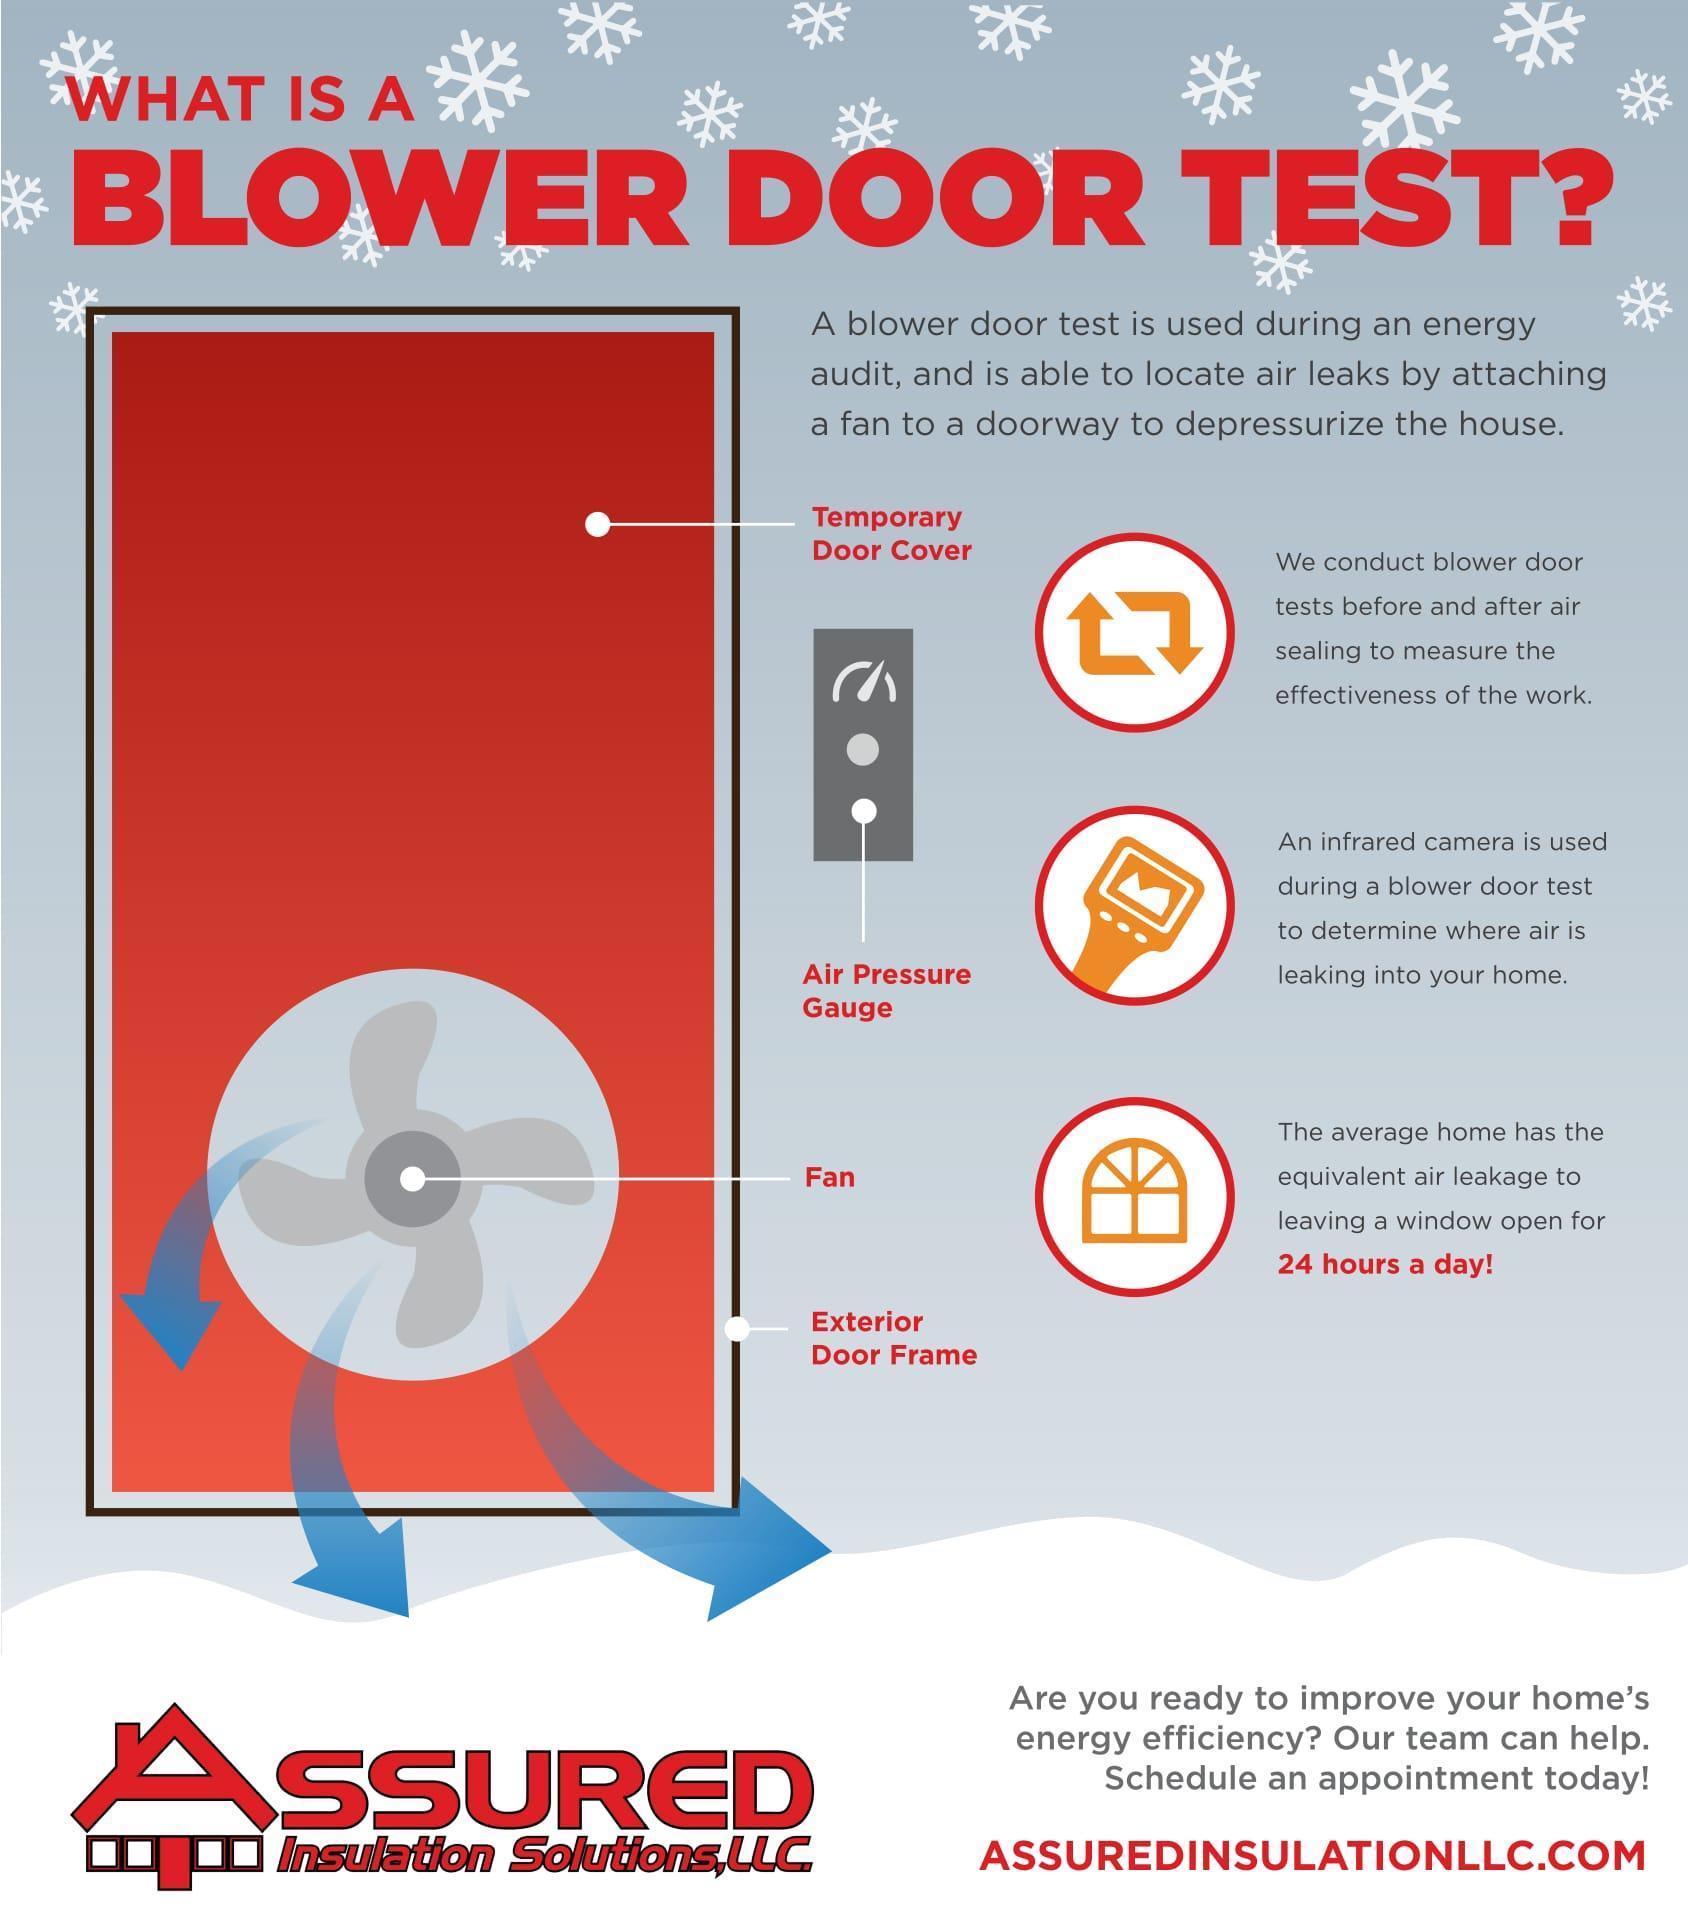 Blower Door Test Energy Audit Assured Insulation, LLC Illinois